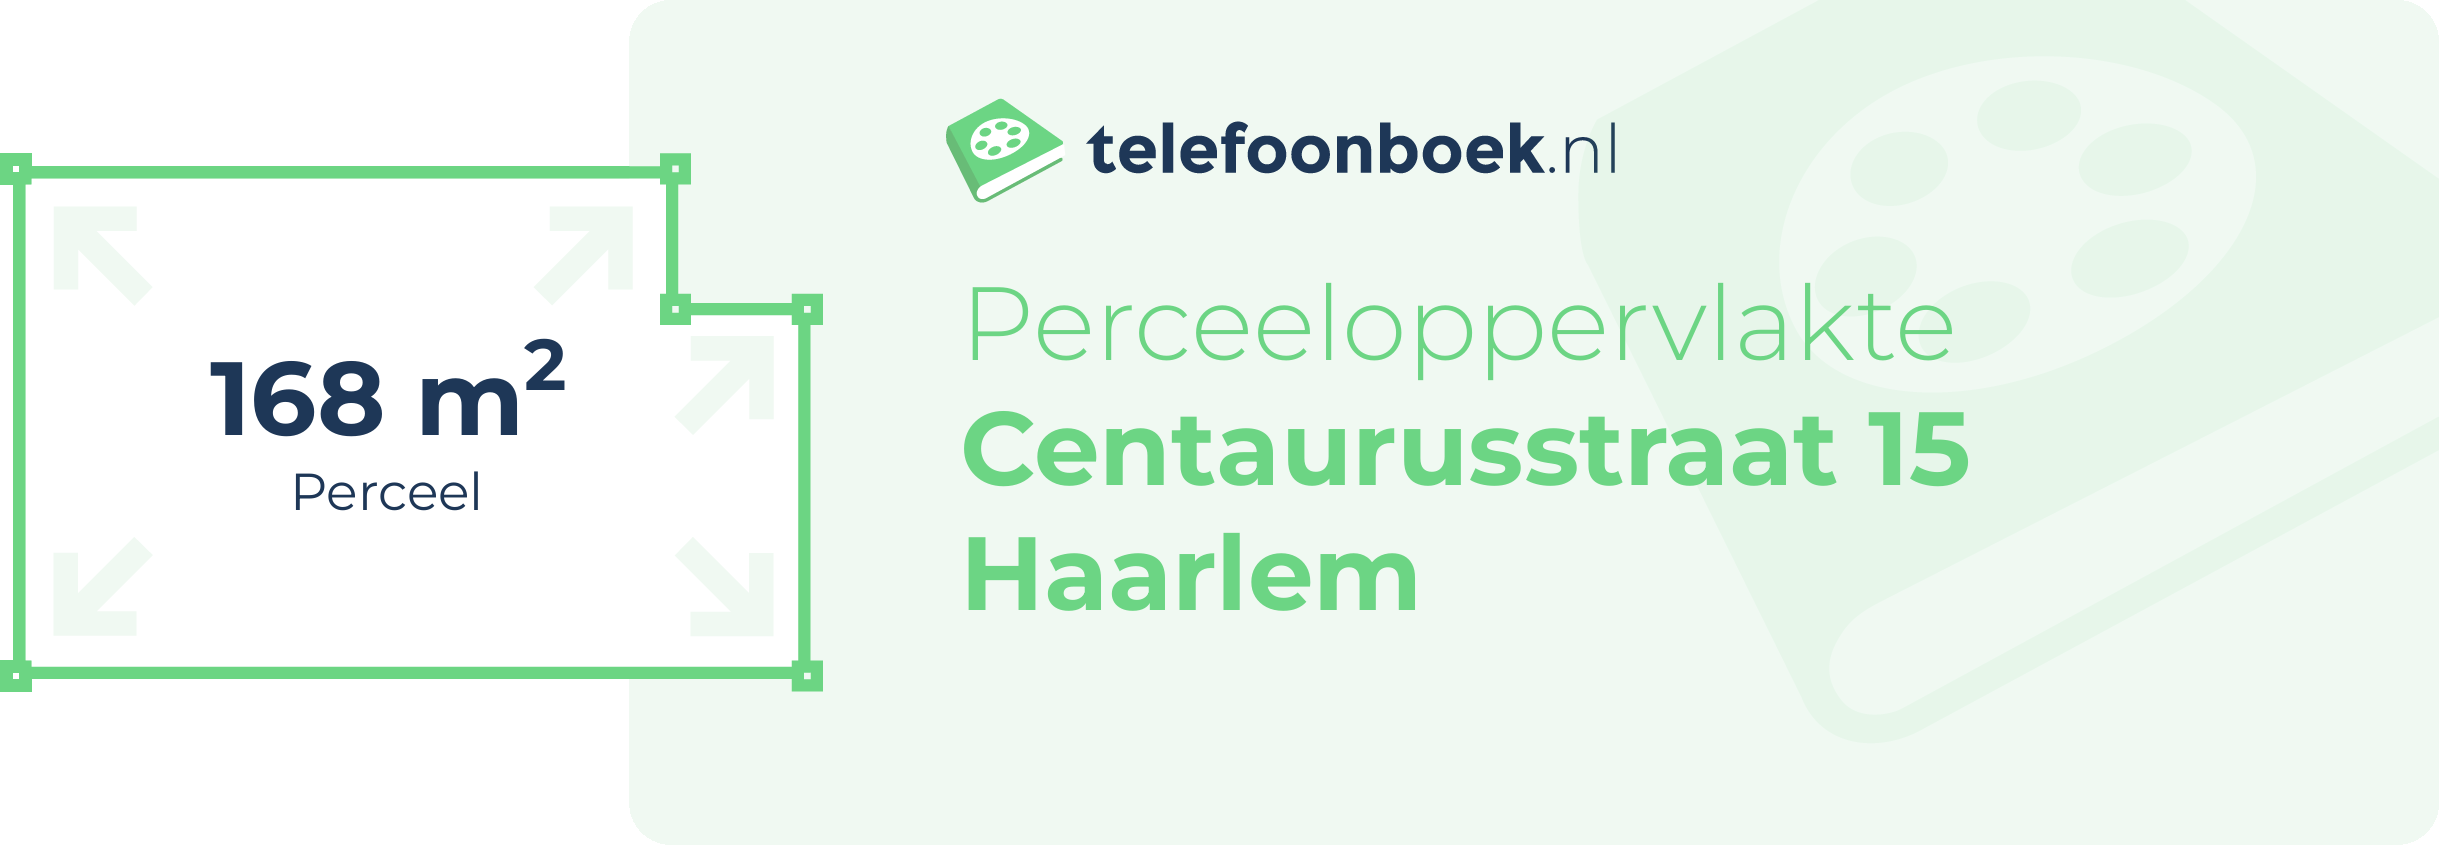 Perceeloppervlakte Centaurusstraat 15 Haarlem